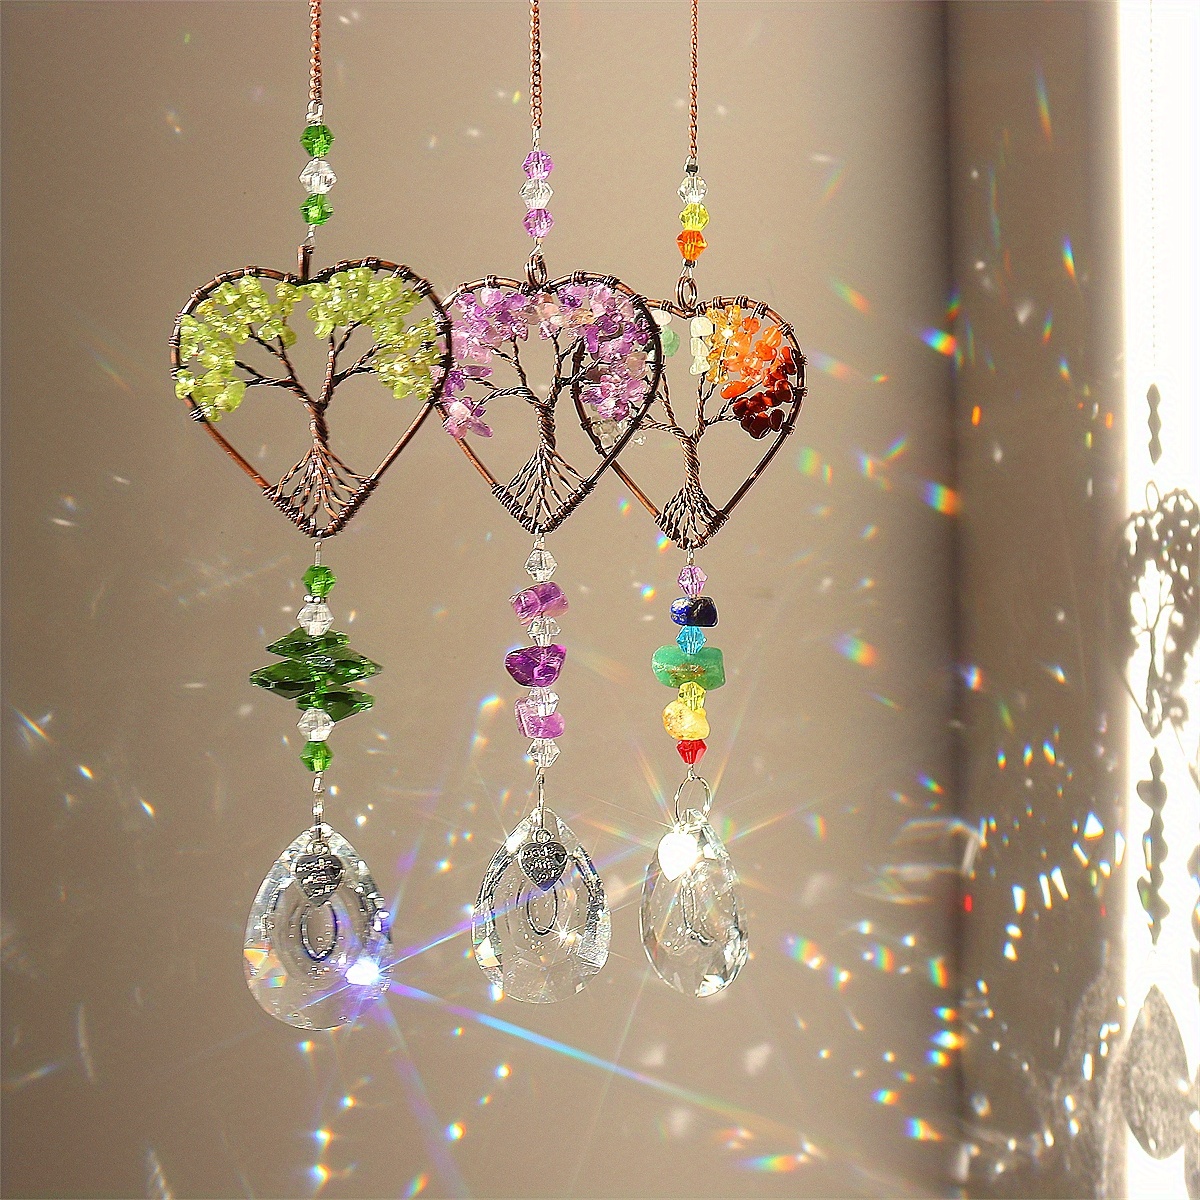 co H&D HYALINE & DORA Glass Suncatcher Crystal Pendant Rainbow Maker  Colorful Heart Shaped Life Tree Hanging Ornament Indoor Outdoor Decor :  .co.uk: Garden & Outdoors